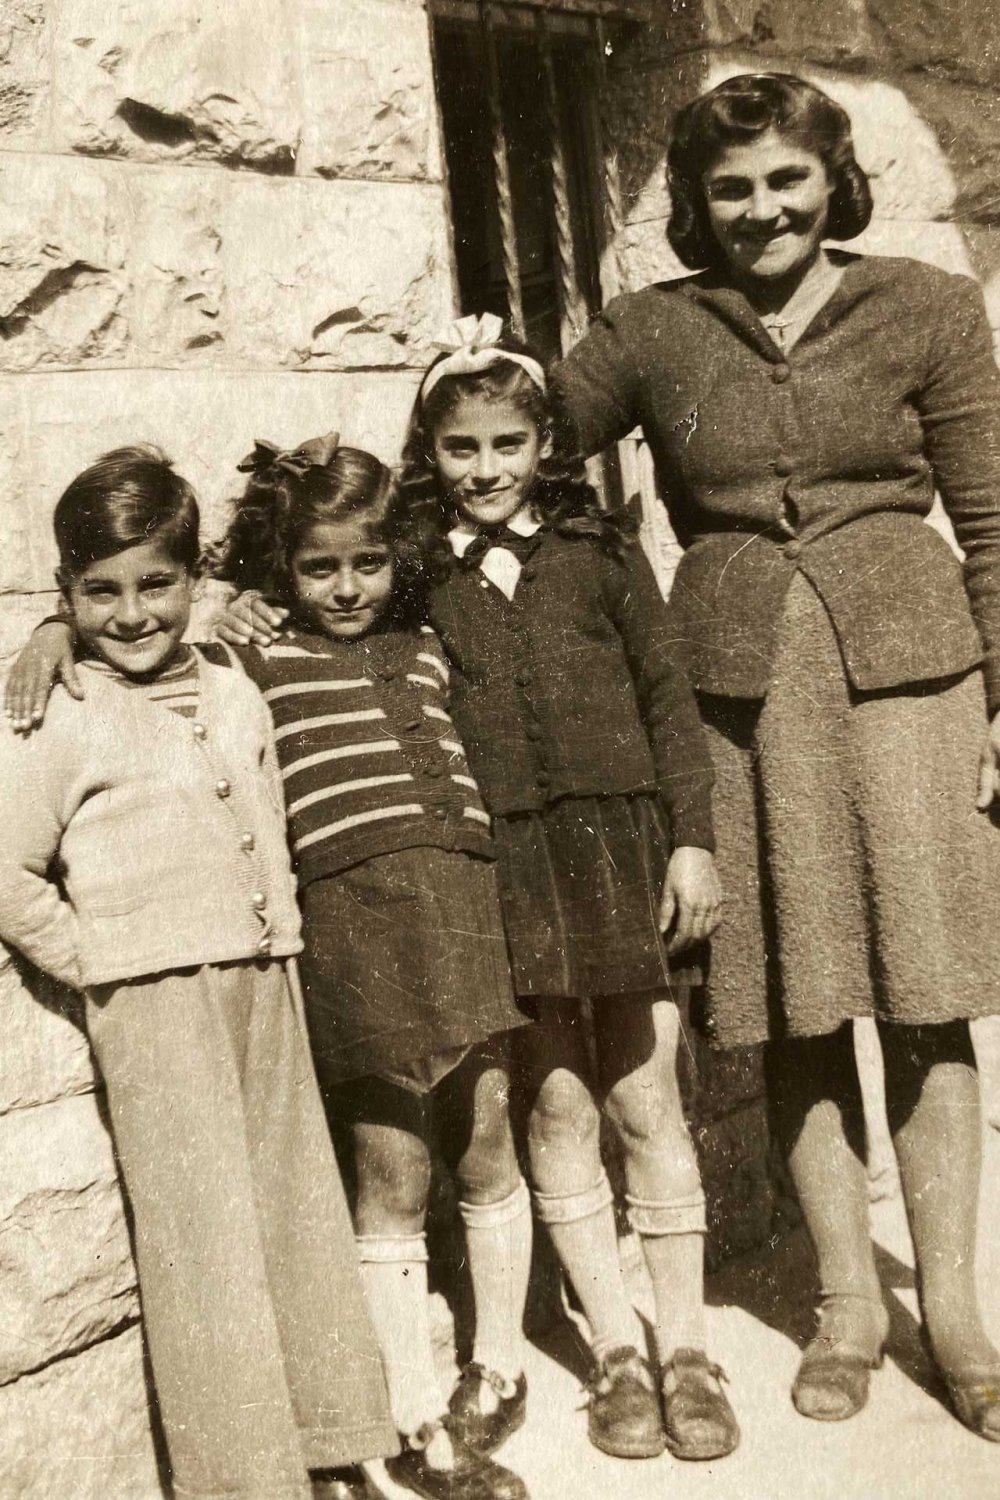 Jerusalem resident Nada Adranly and her children, in Qatamon neighborhood, 1944